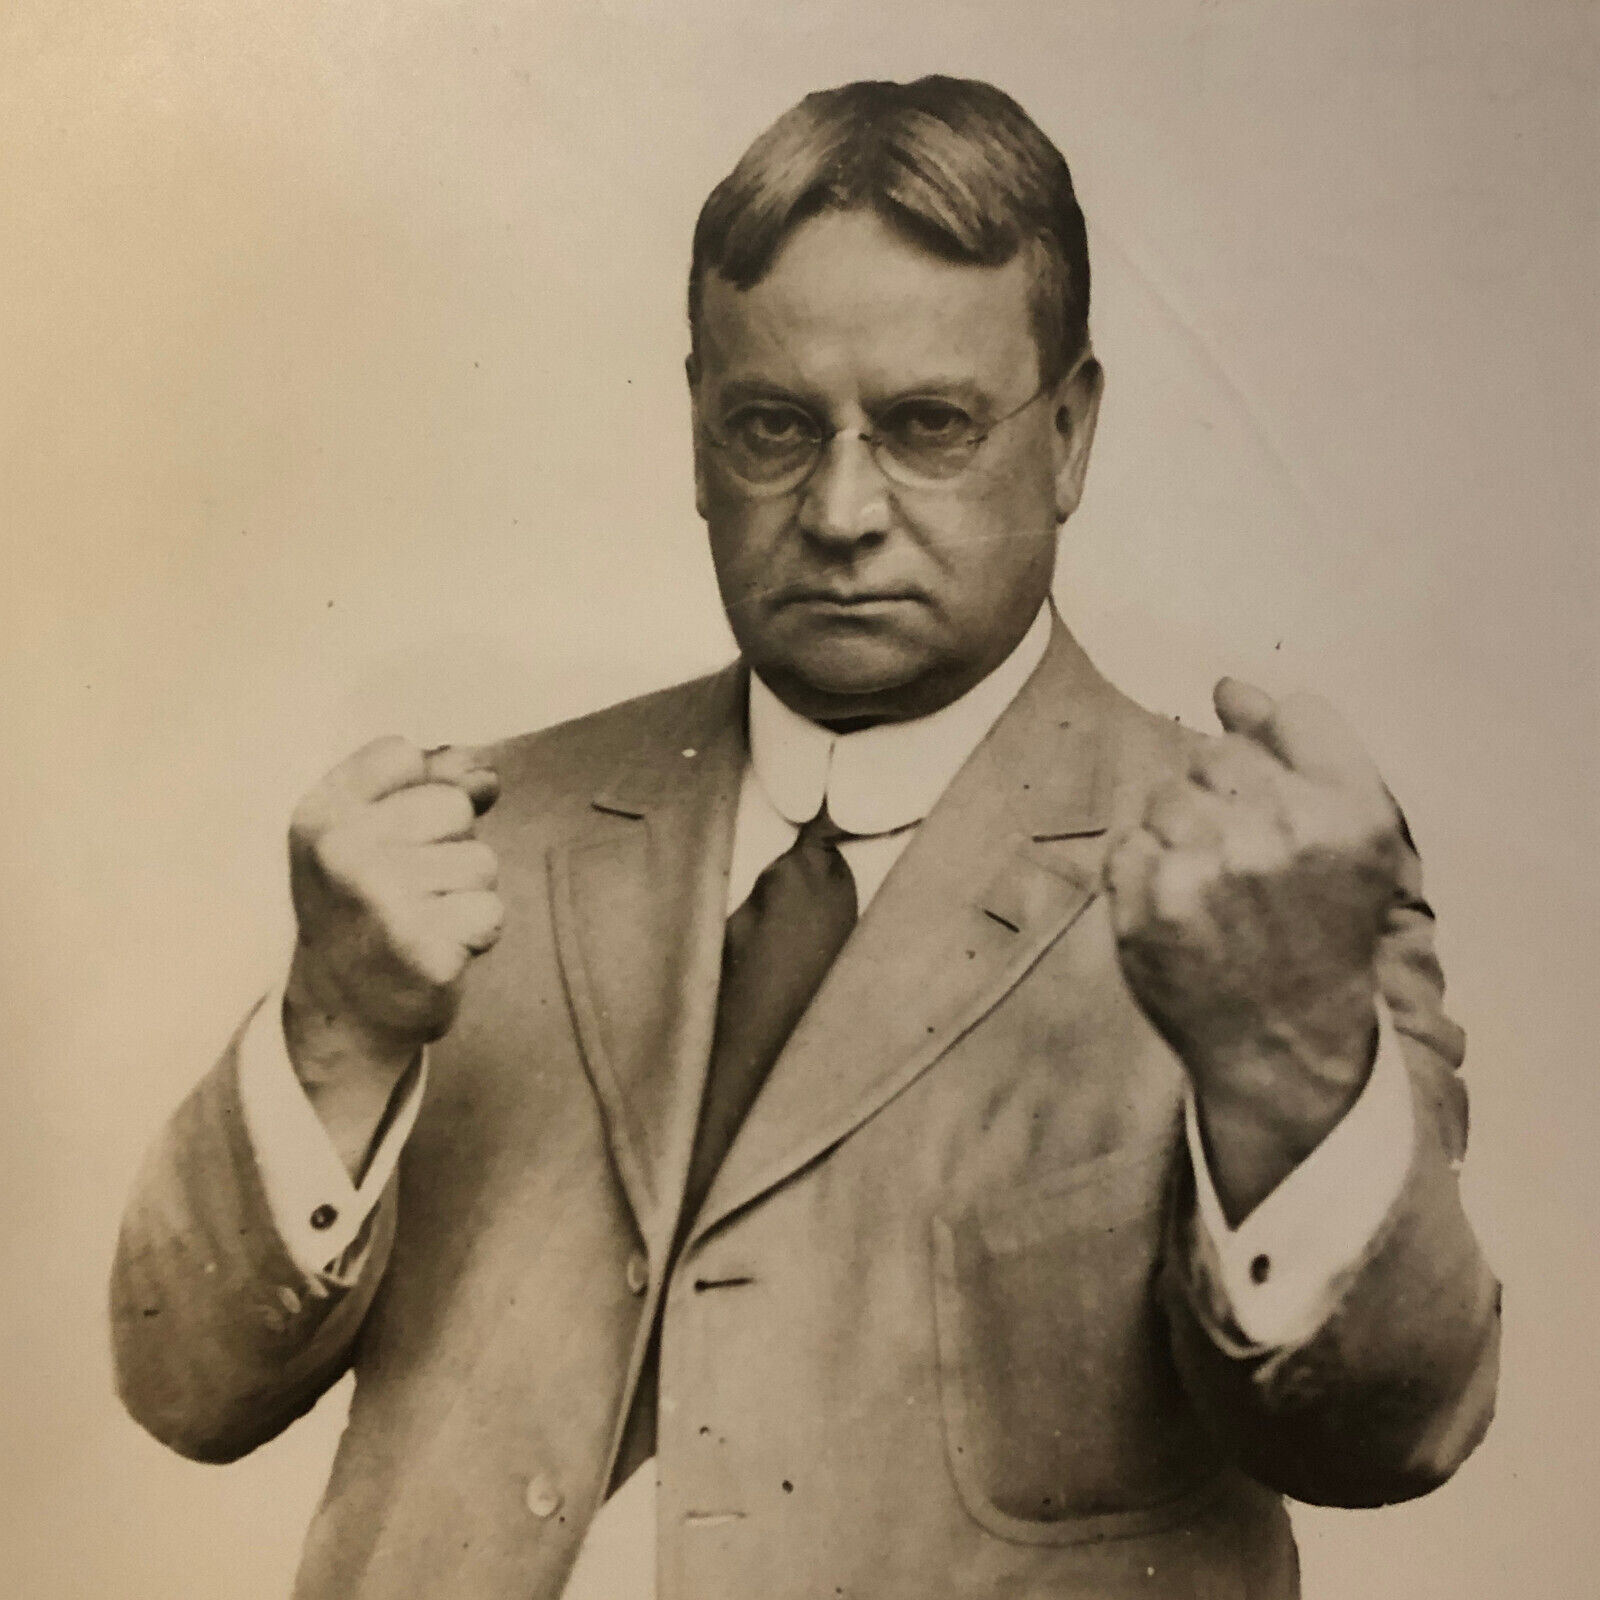 Press Photo Photograph Senator Hiram Johnson Fighting Pose 1933 California